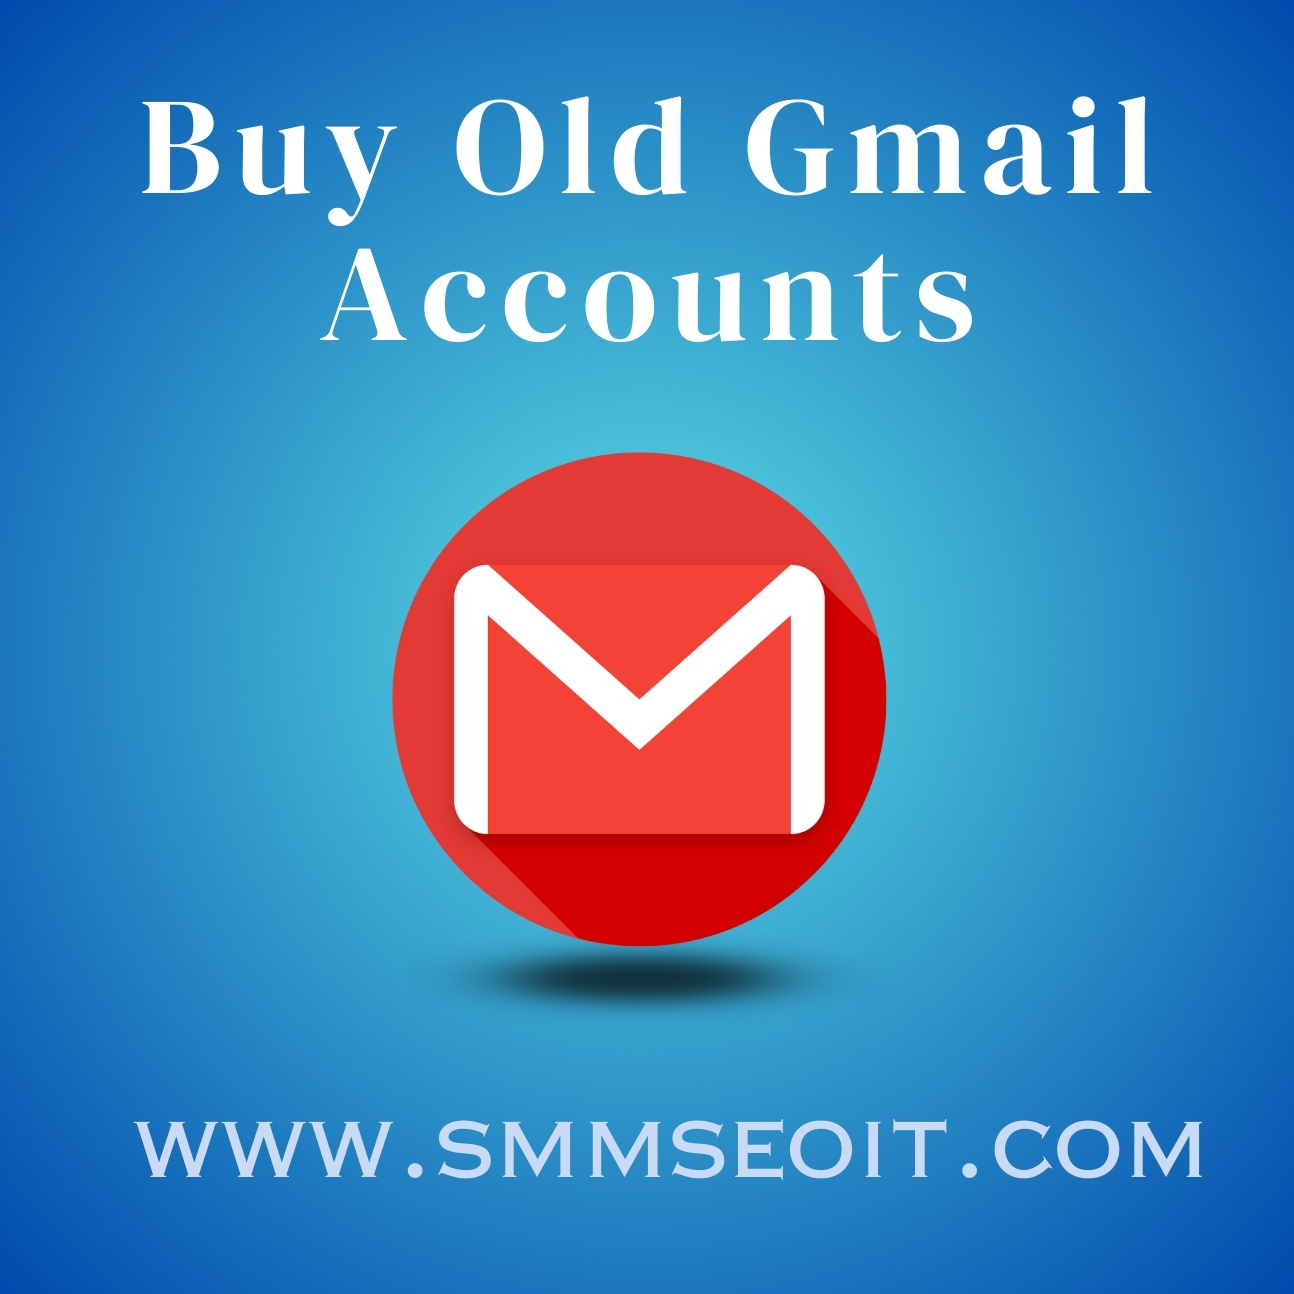 Buy Old Gmail Accounts - 100% PVA Aged Gmail Account